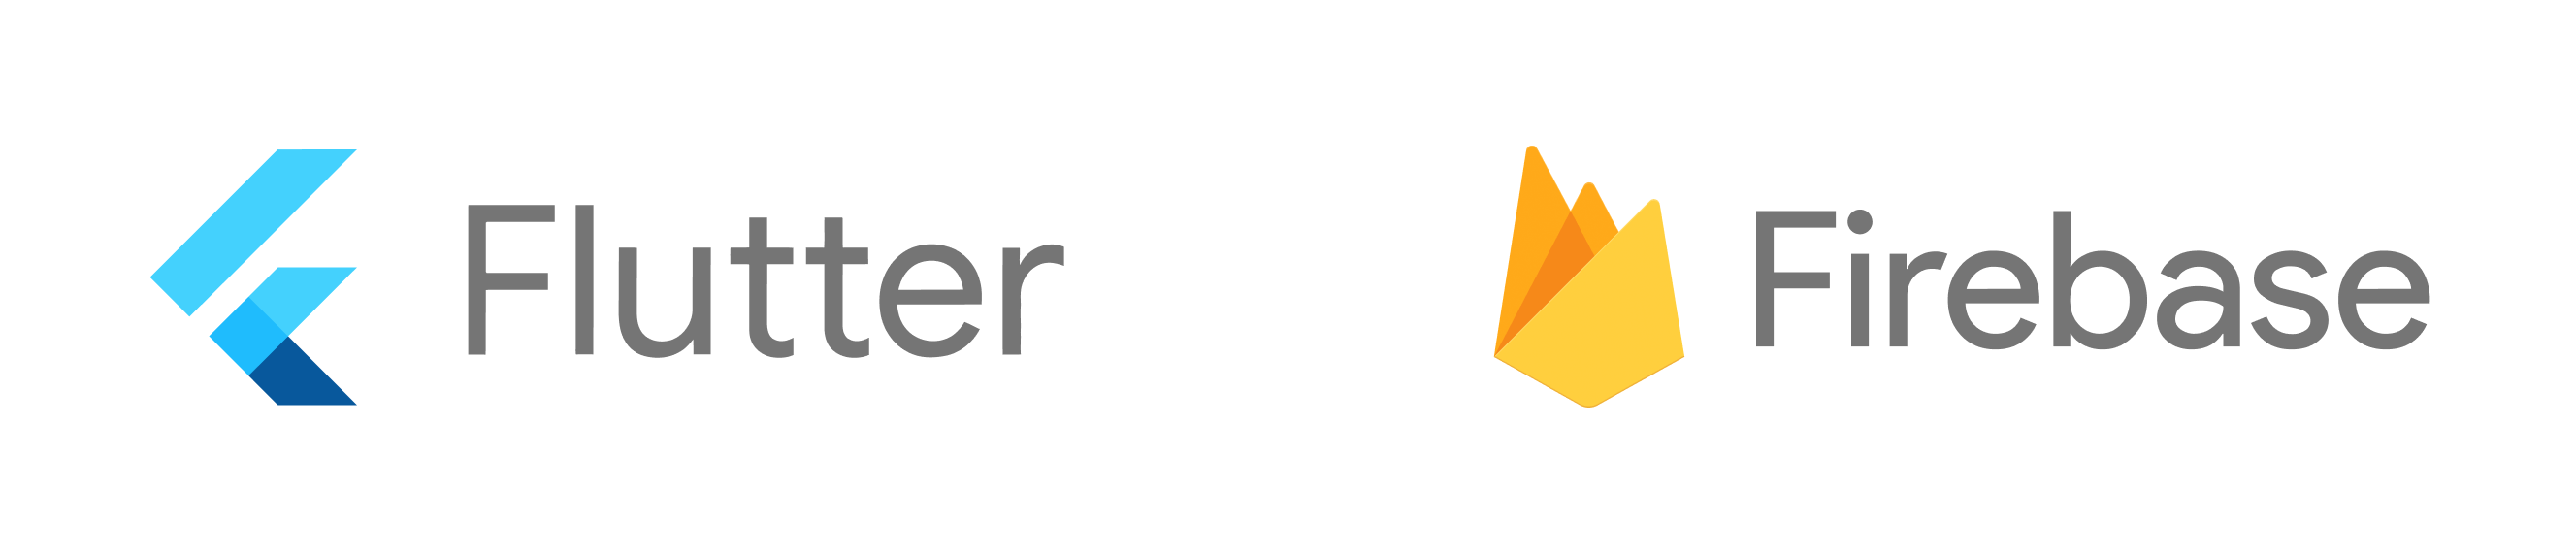 flutter-firebase-logos